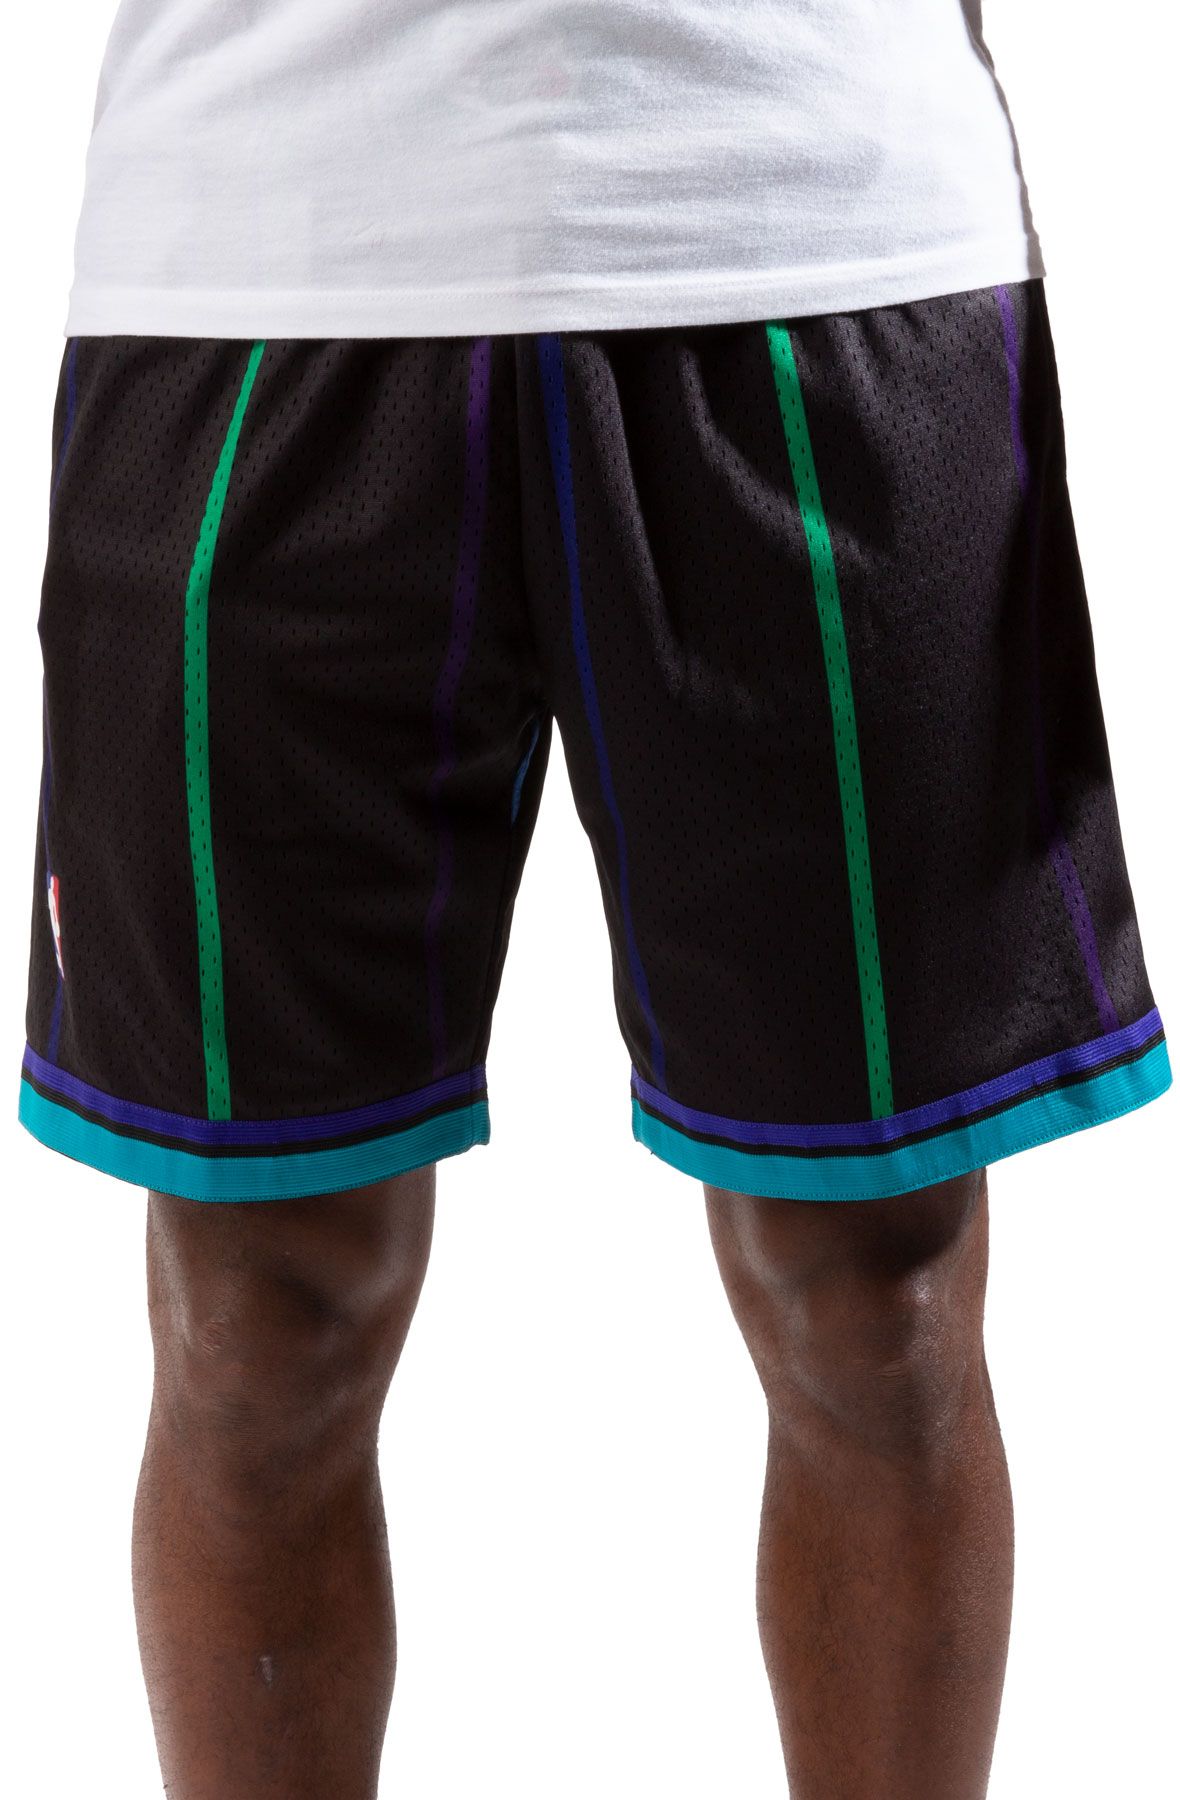 Charlotte Hornets Black Team Colour Swingman Short By Mitchell & Ness - Mens